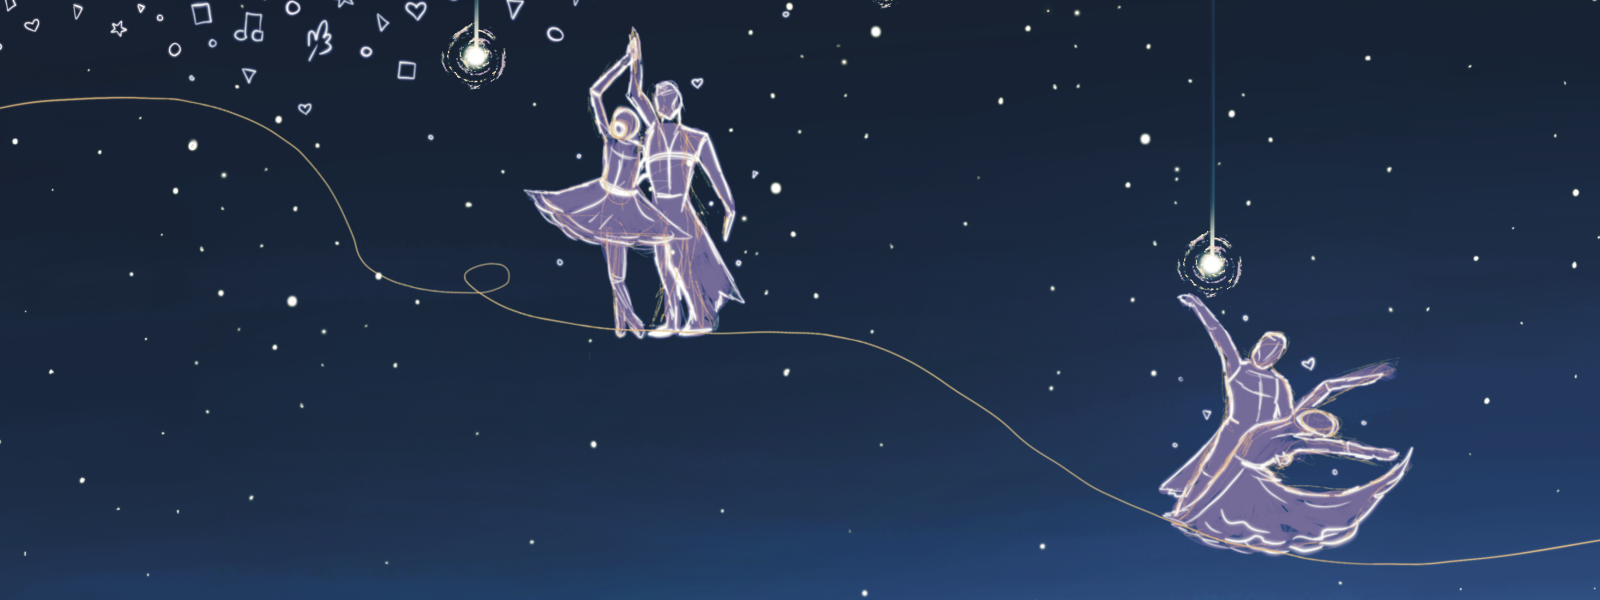 illustration of dancers against a night sky